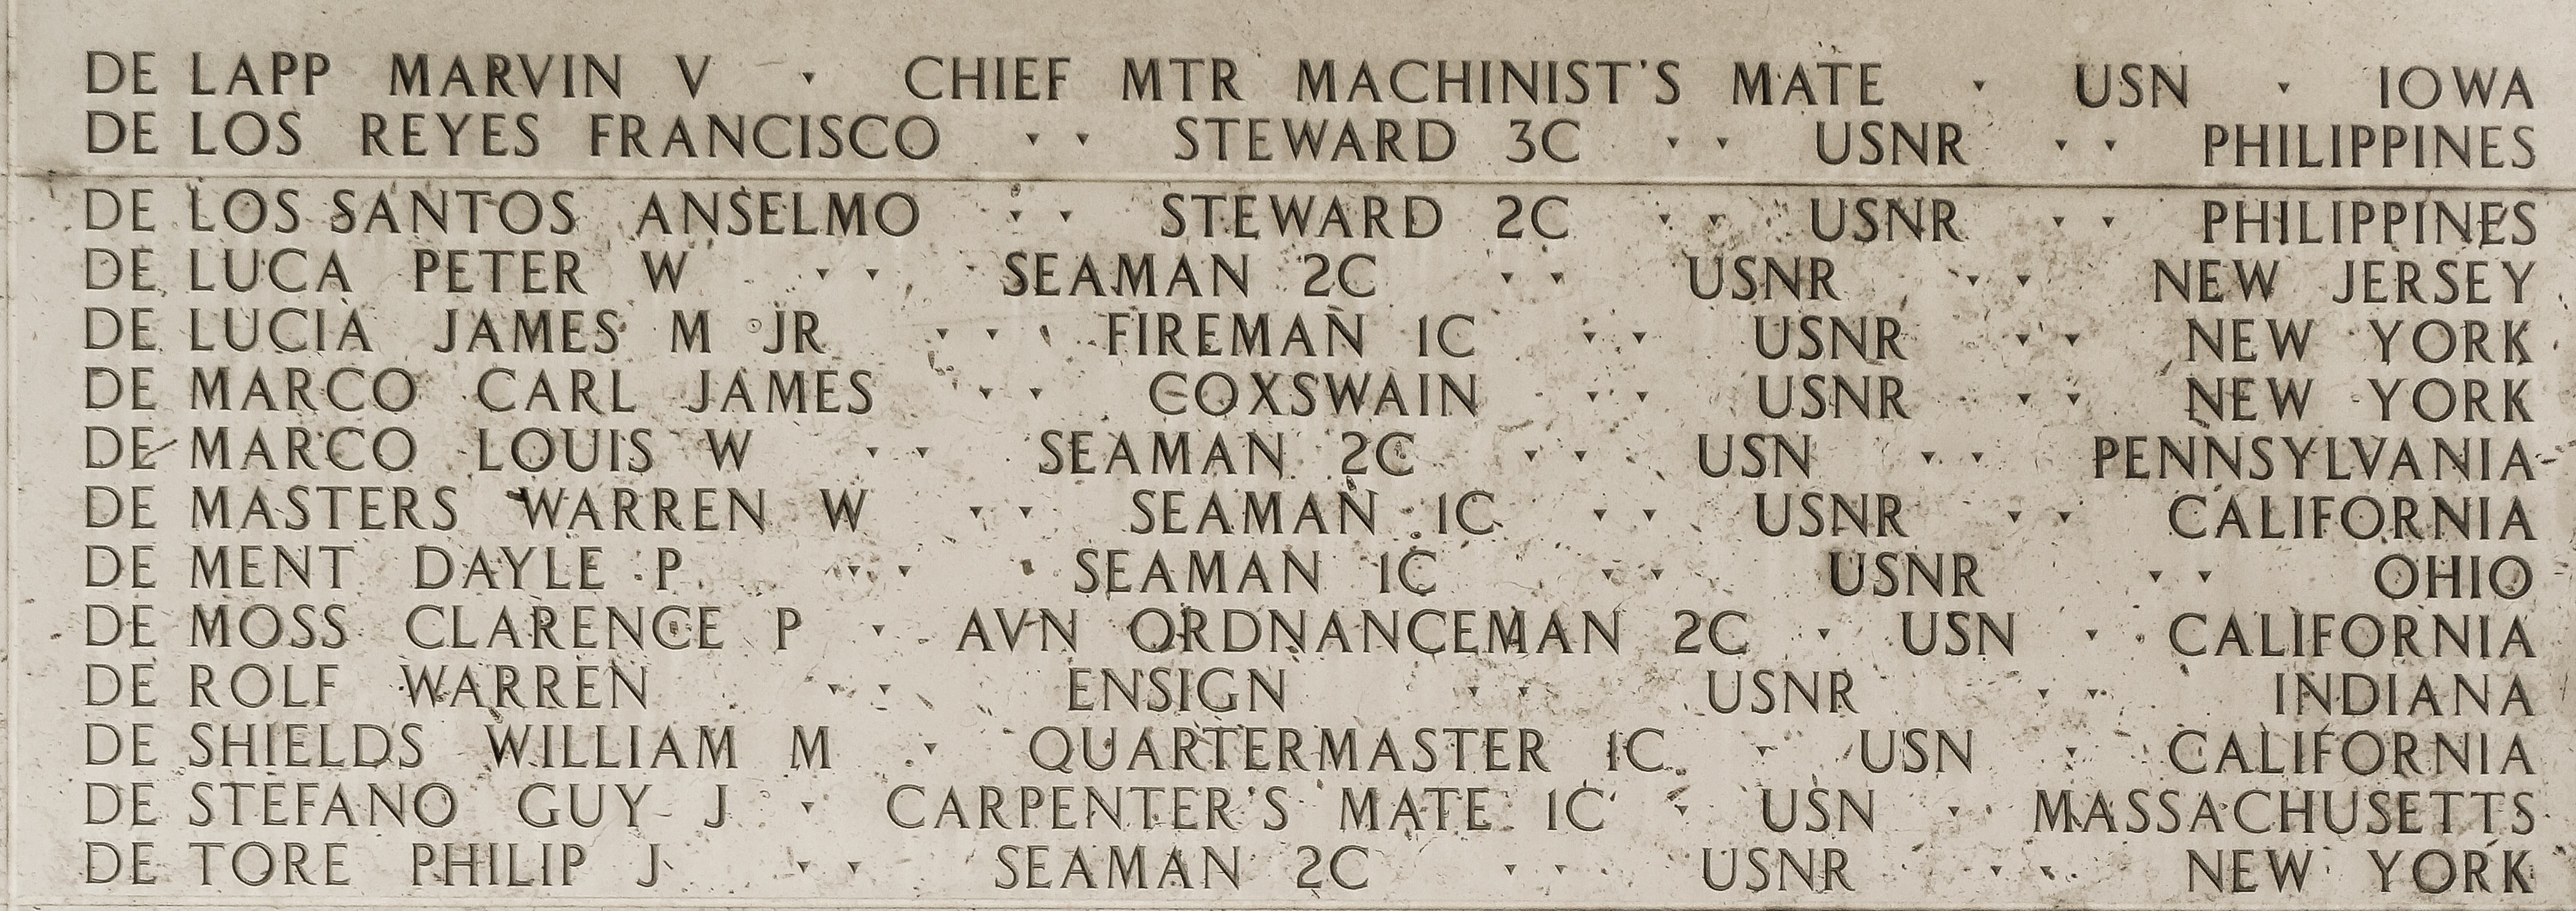 Louis W. De Marco, Seaman Second Class